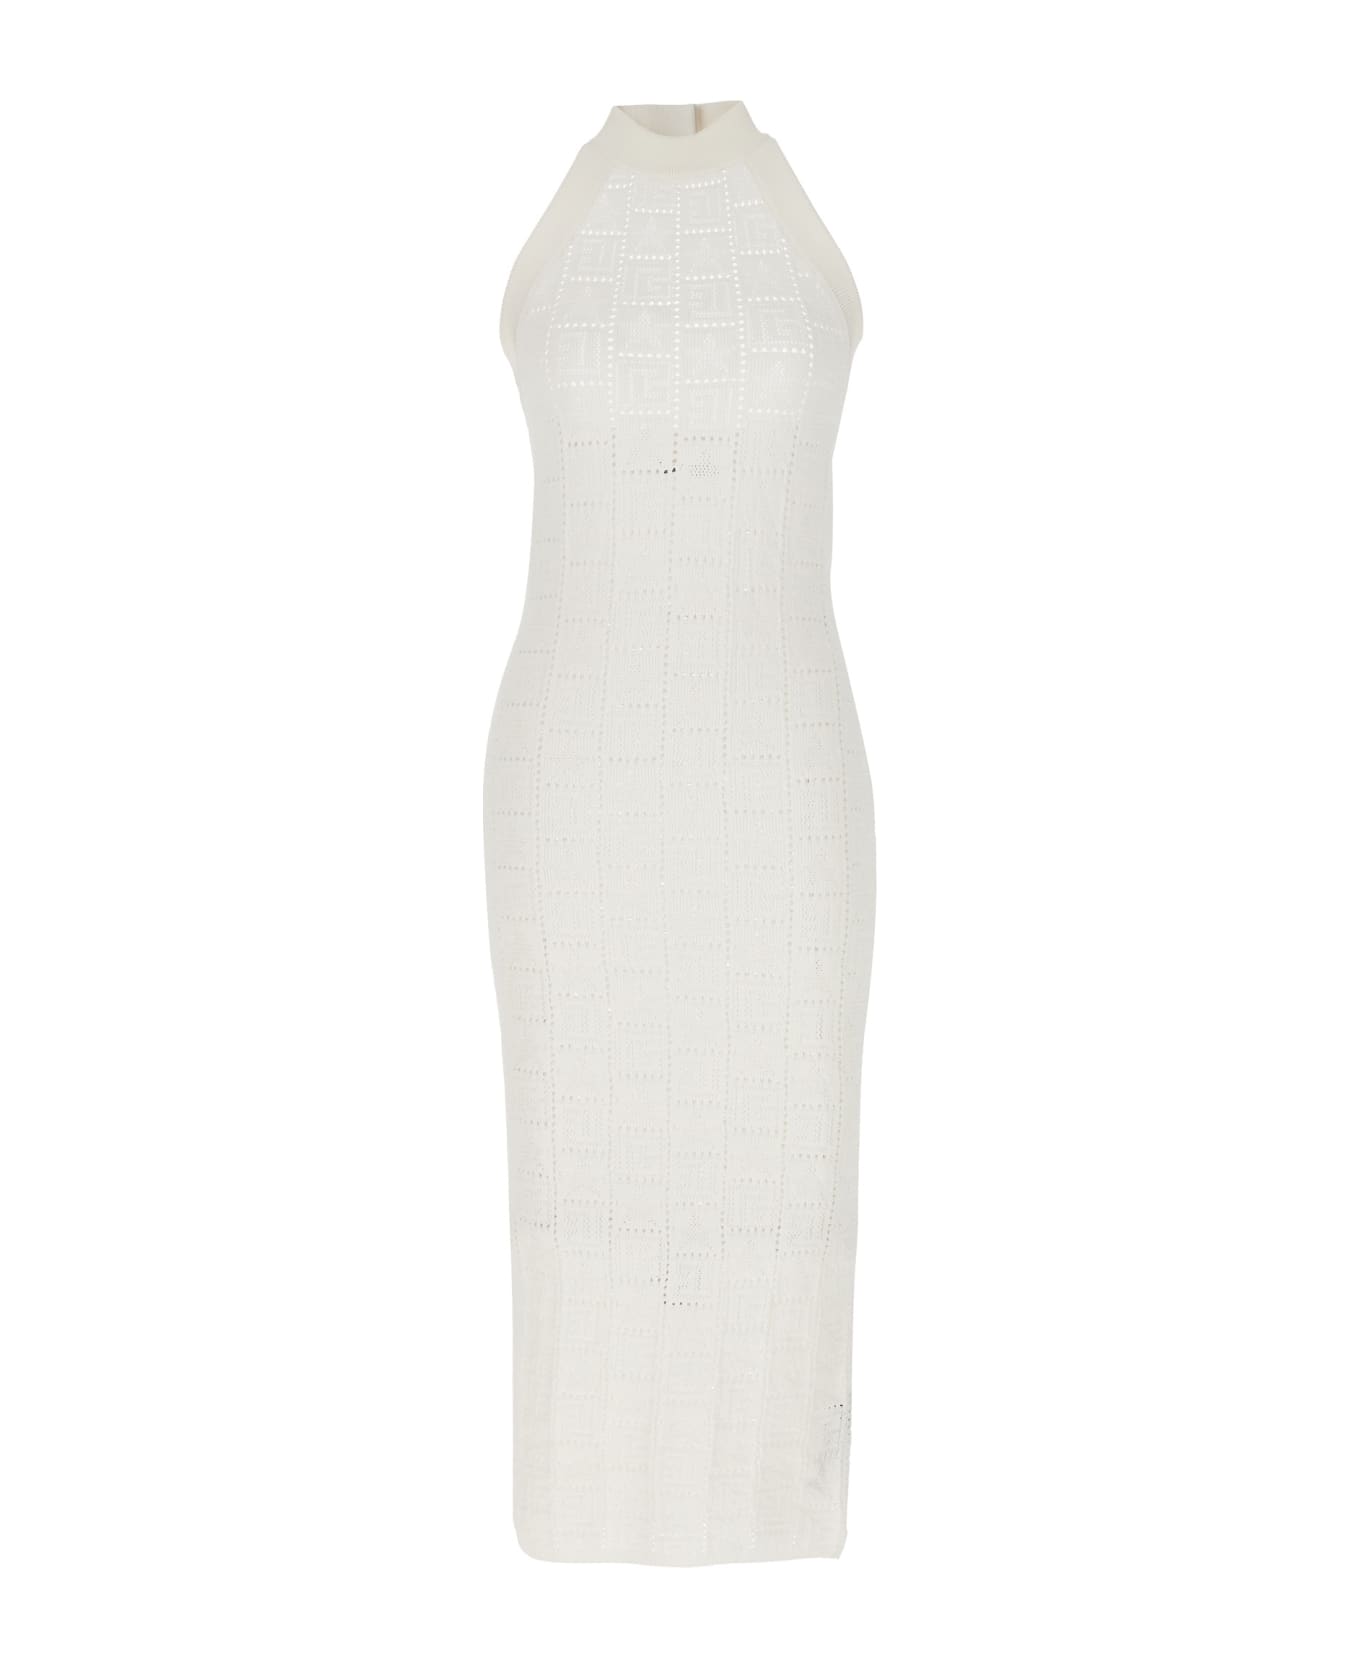 Balmain Monogrammed Knit Dress - White